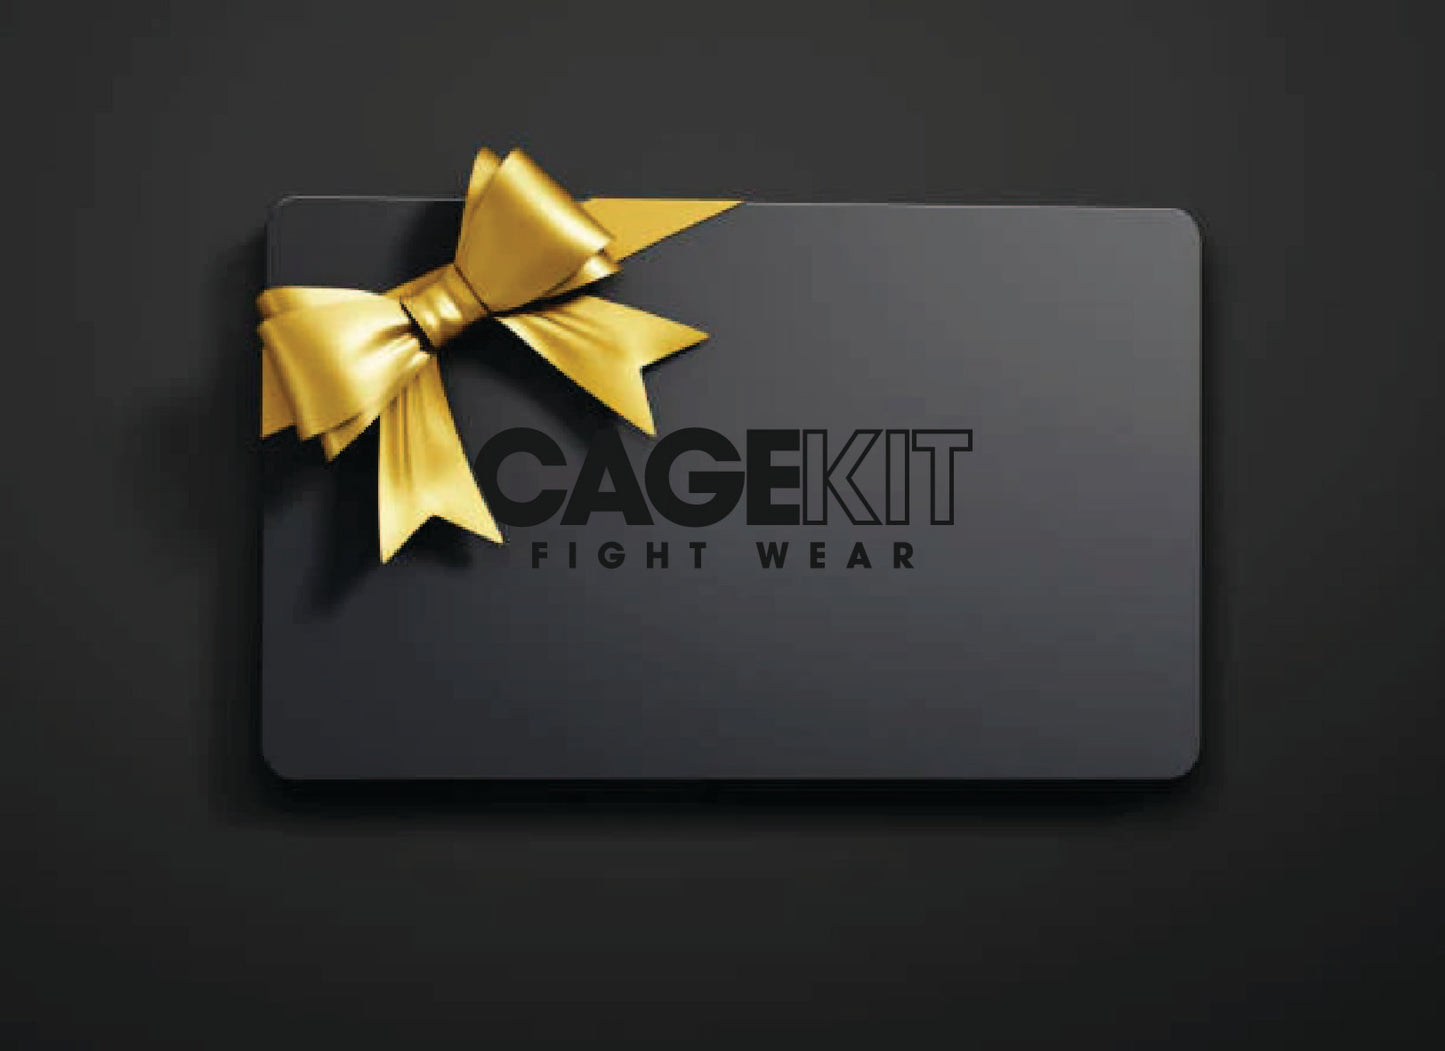 Cage Kit Digital Gift Cards